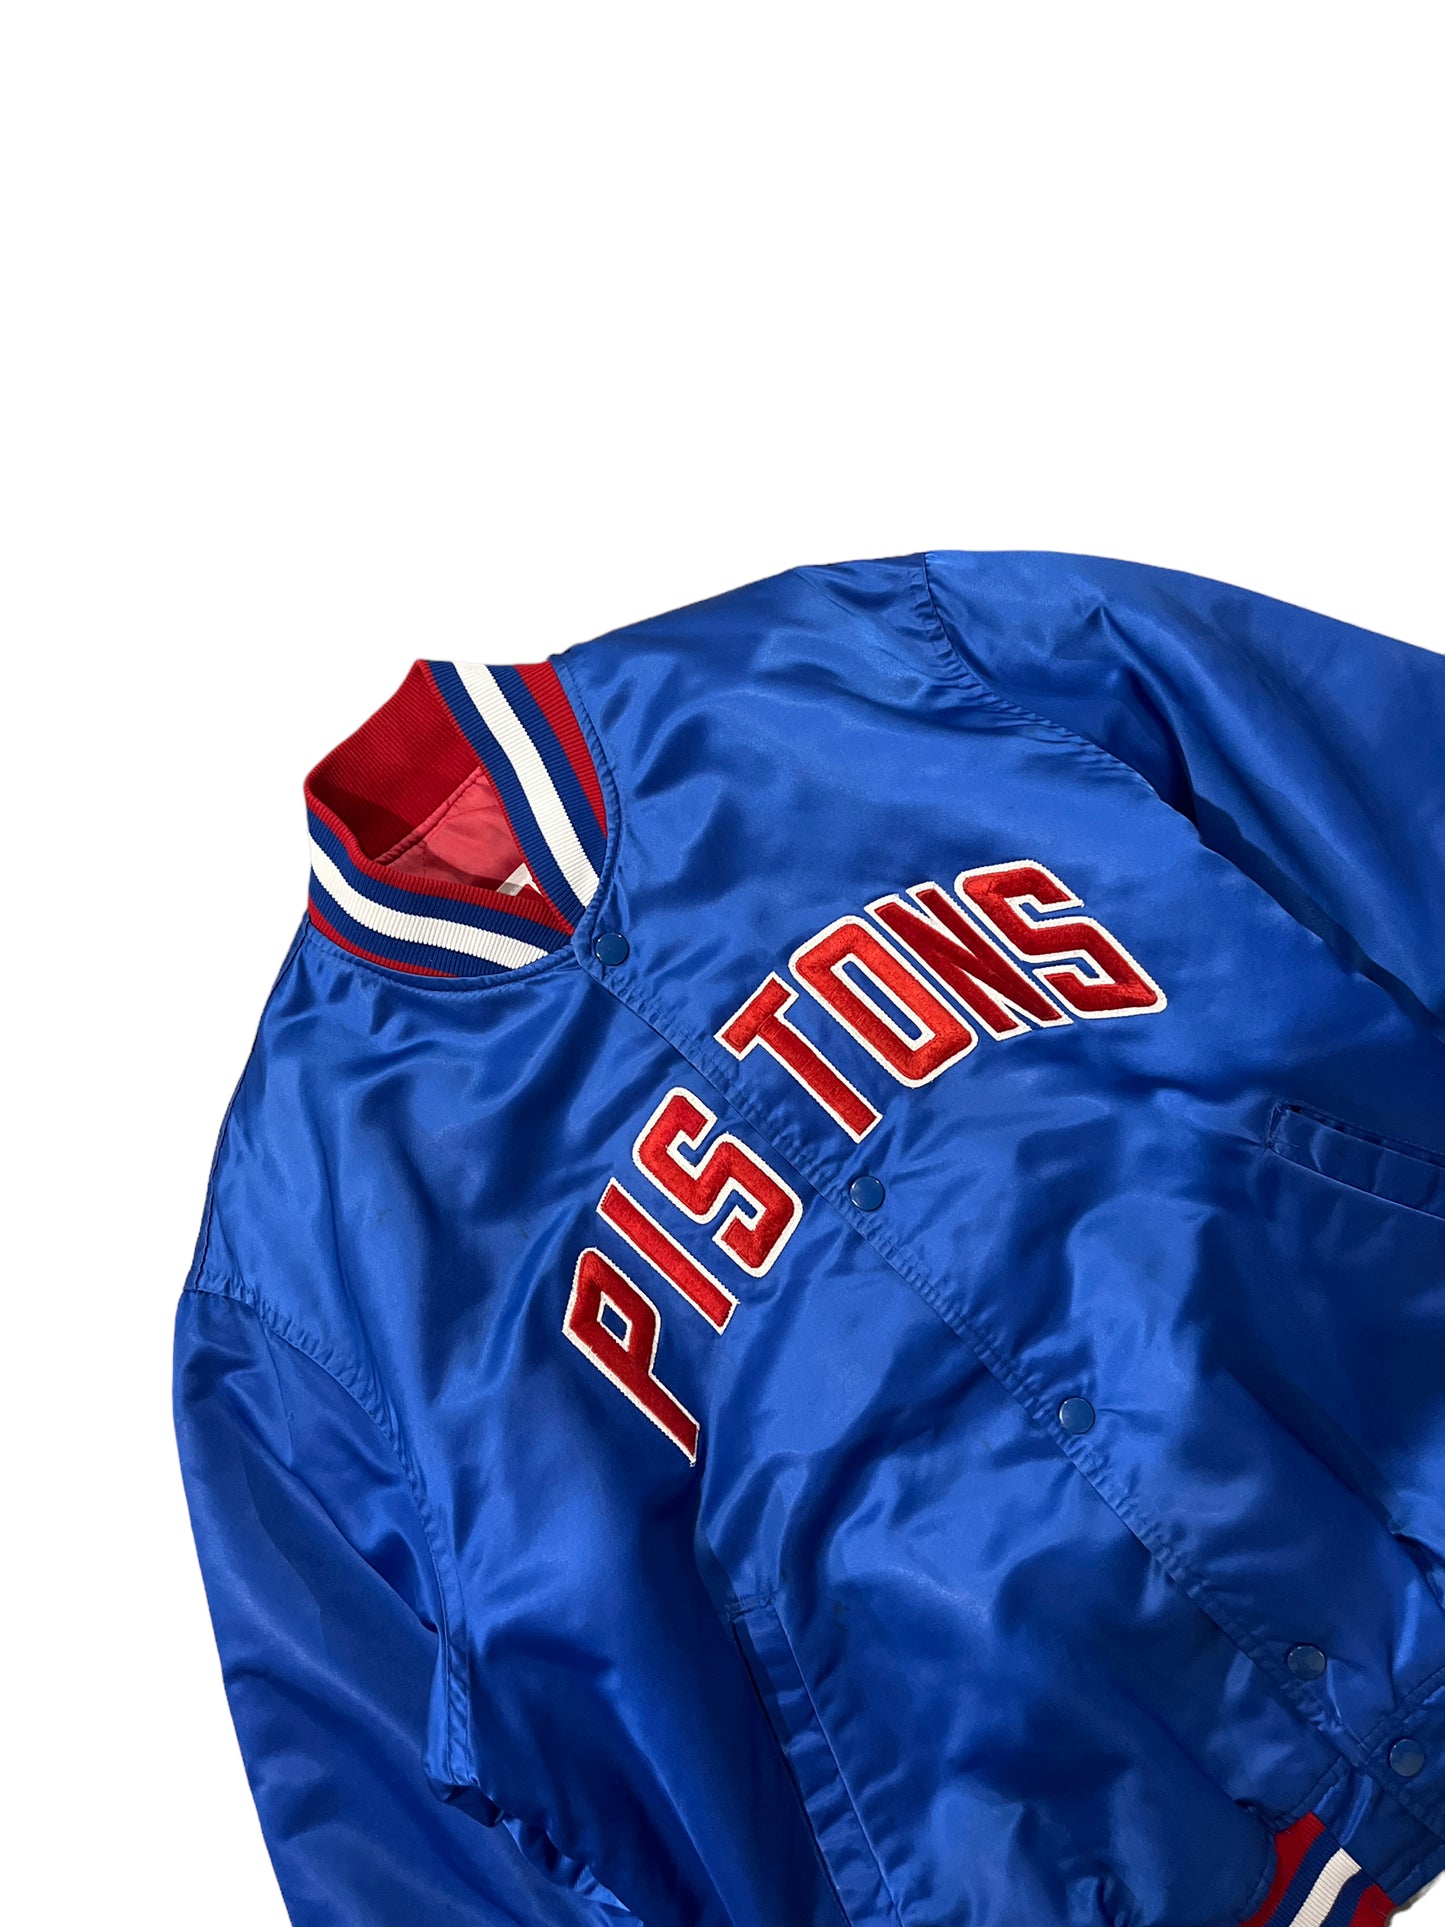 Vintage Starter Detroit Pistons Satin Jacket